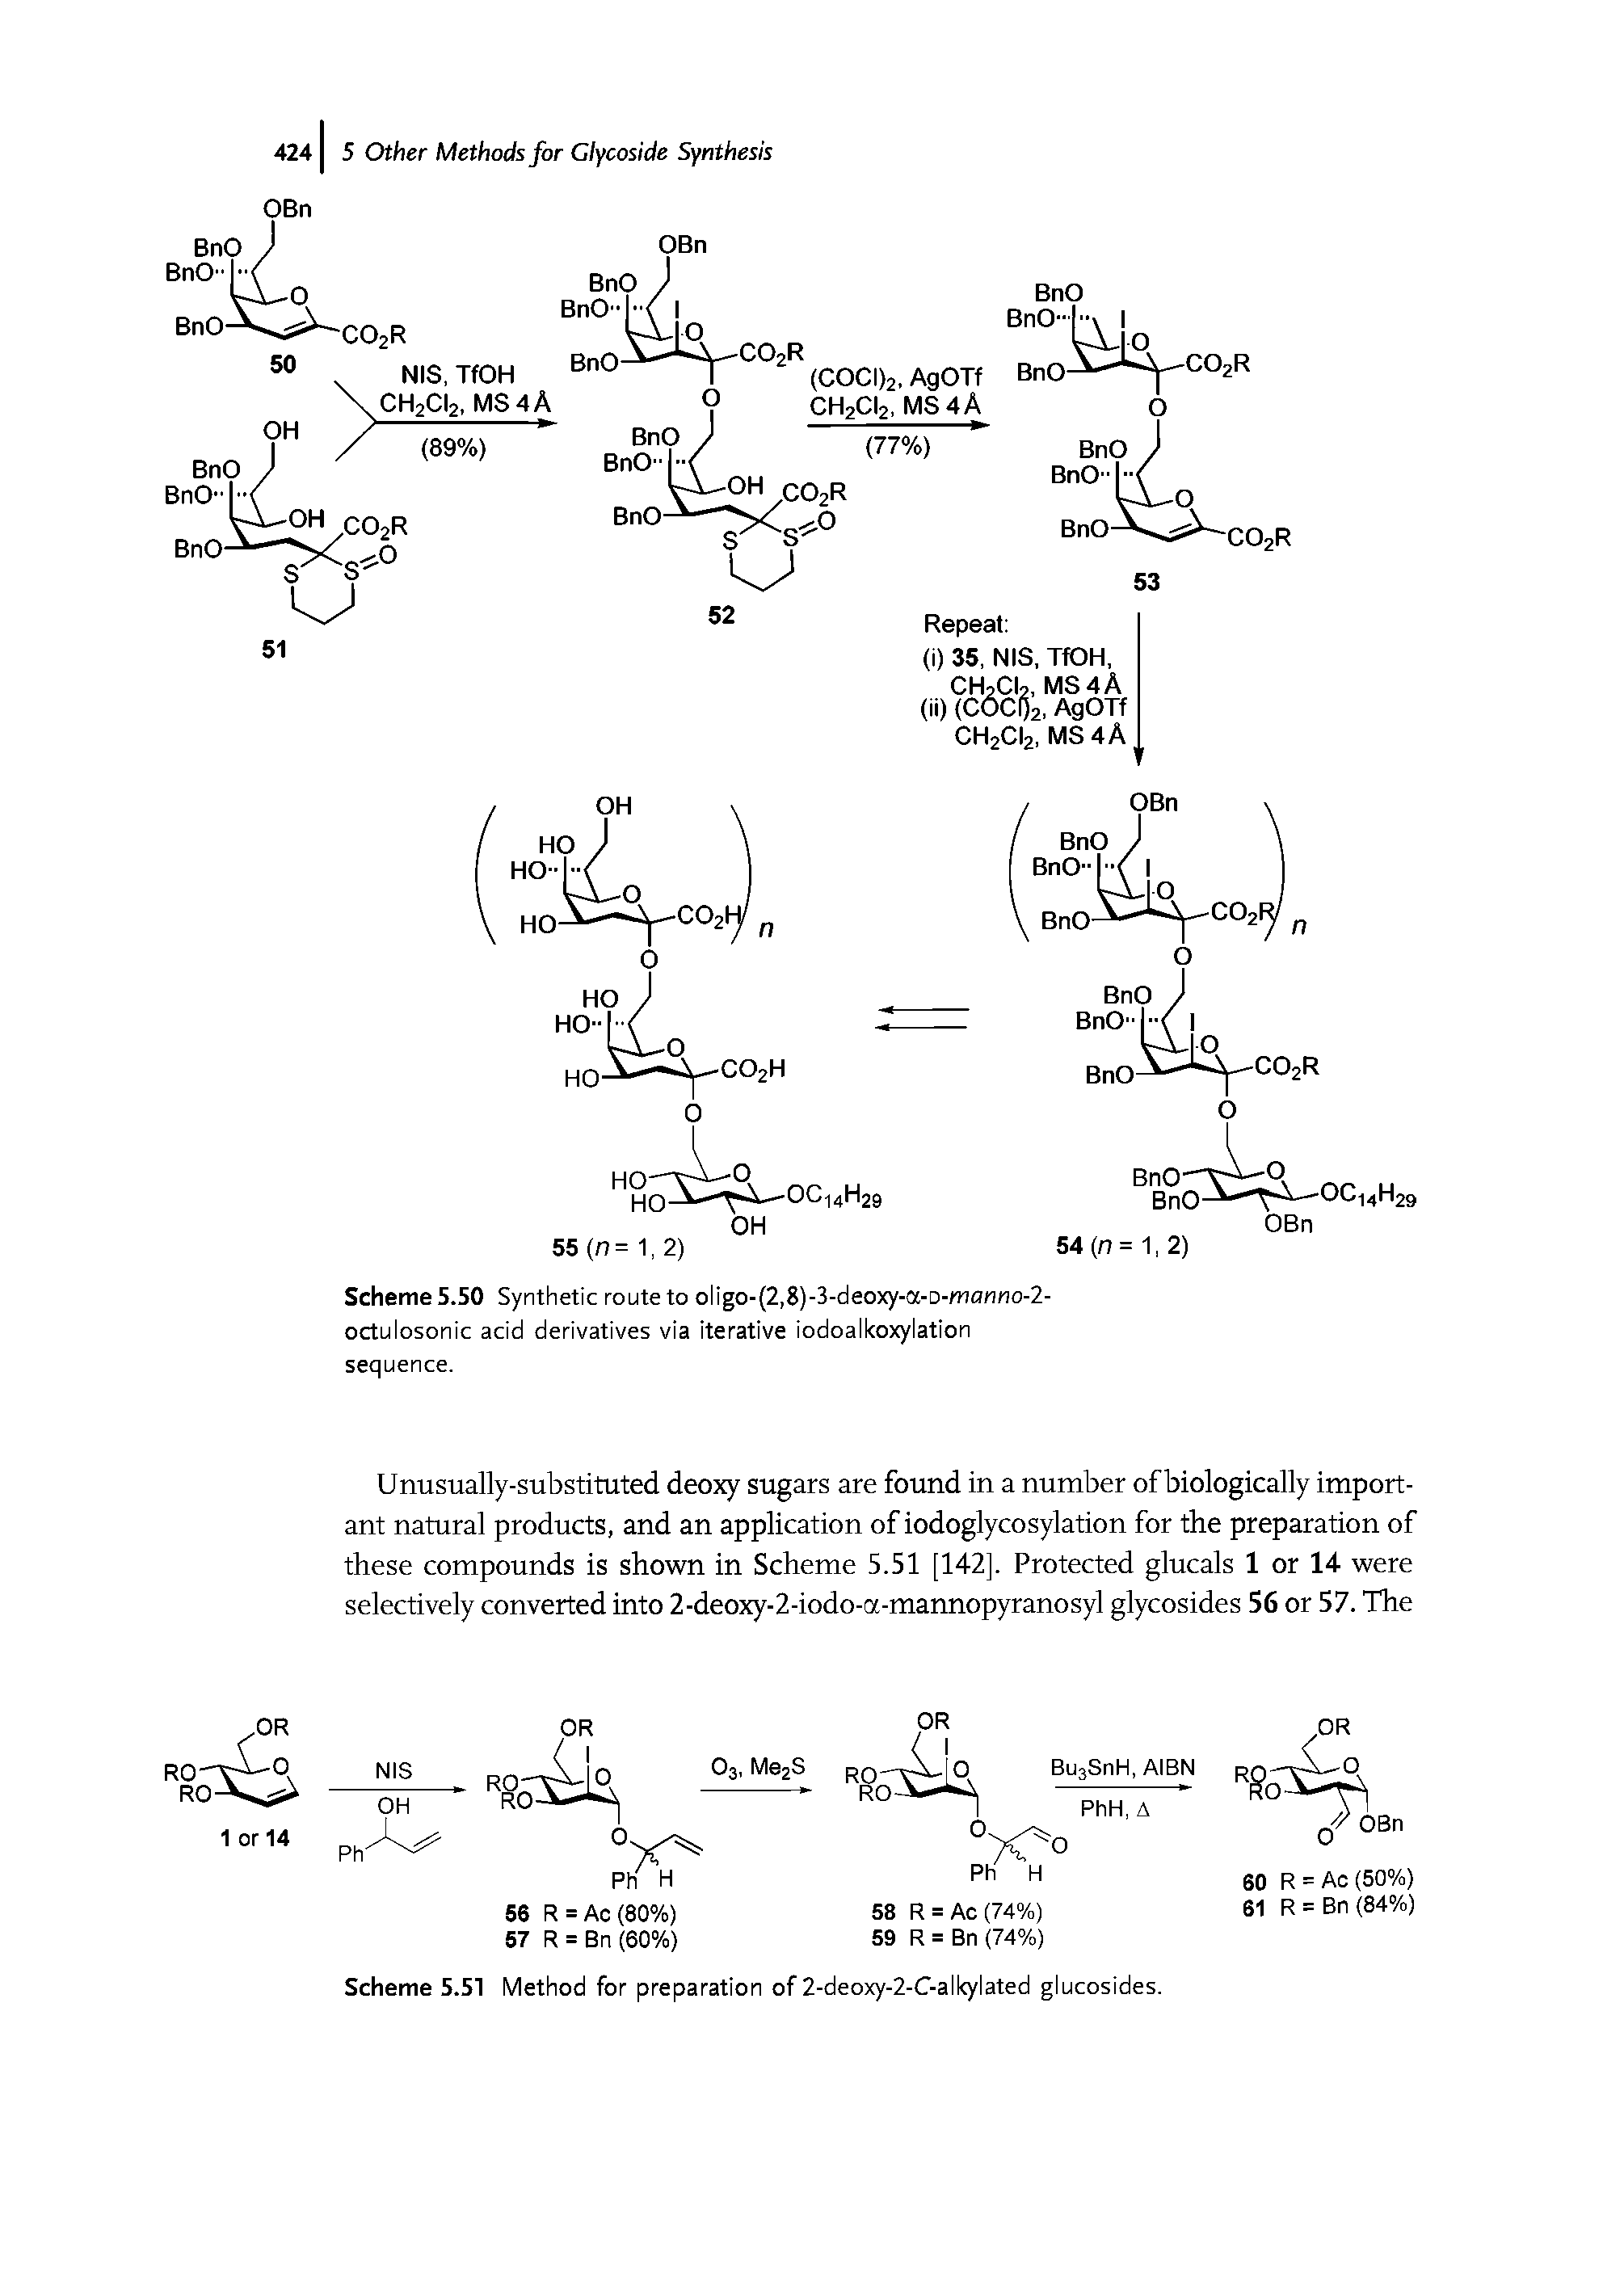 Scheme 5.51 Method for preparation of 2-deoxy-2-C-alkylated glucosides.